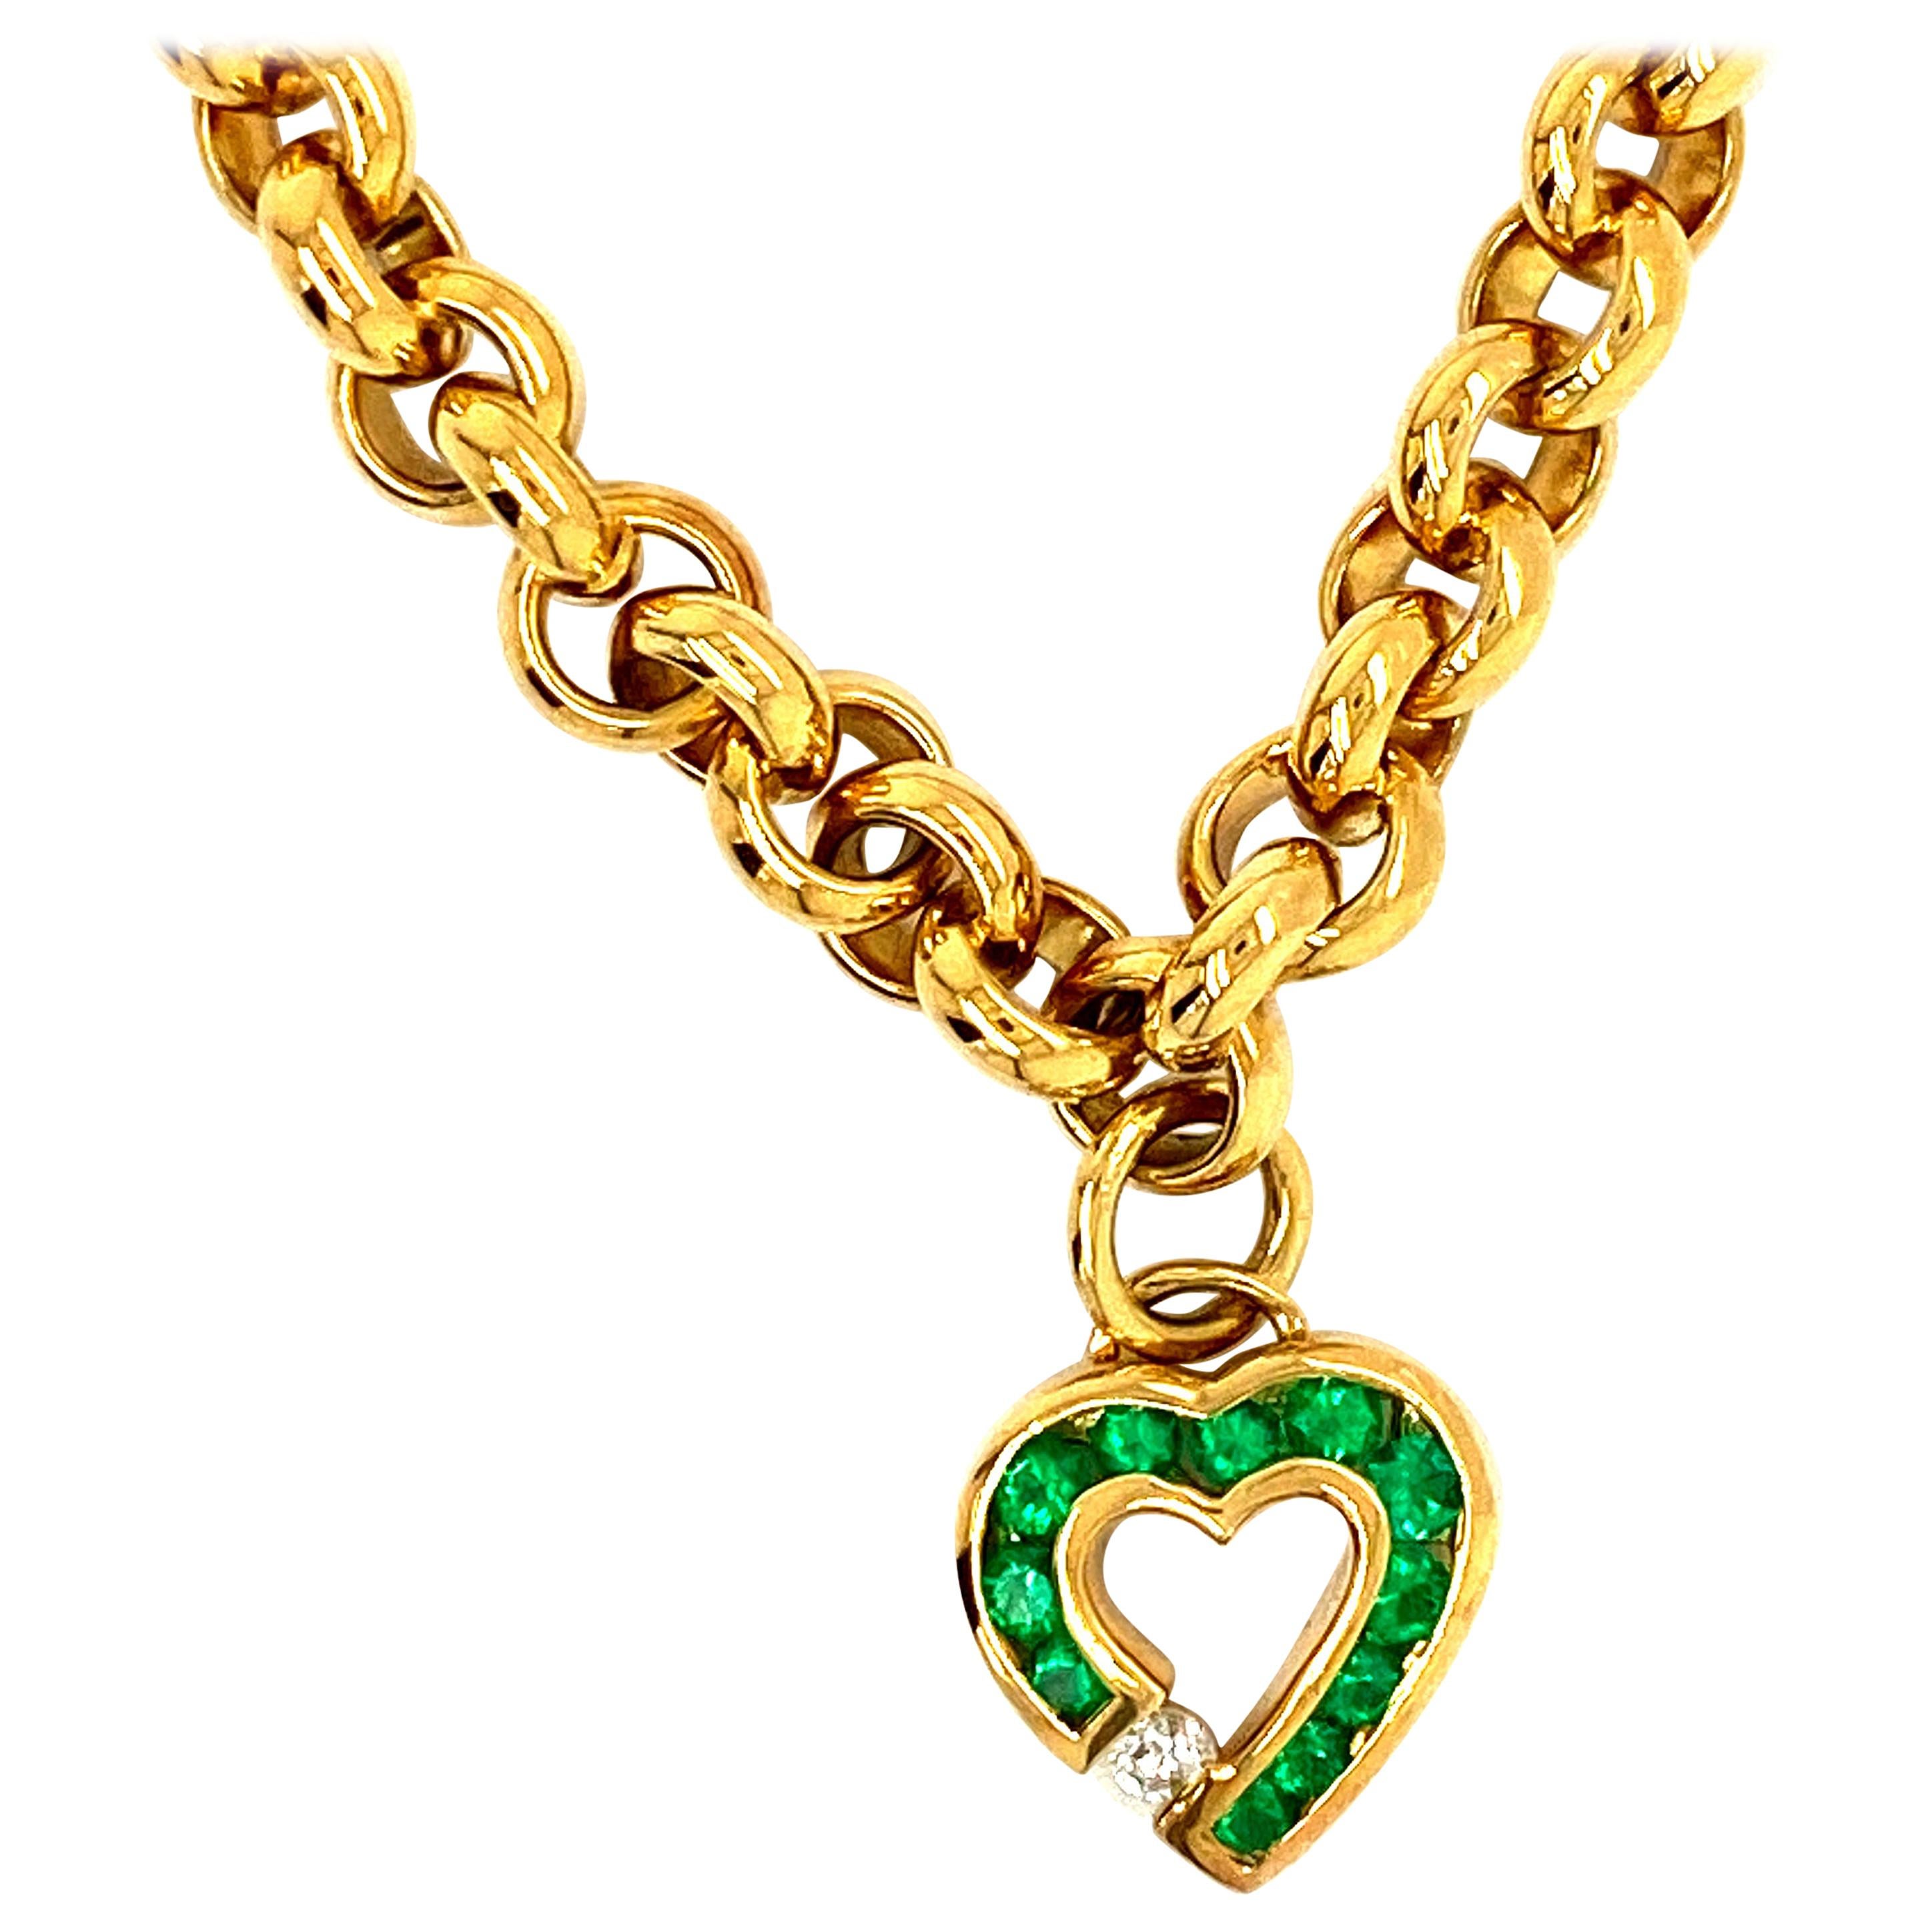 Krypell 18 Karat Gold Link Bracelet with Emerald and Diamond Heart Charm